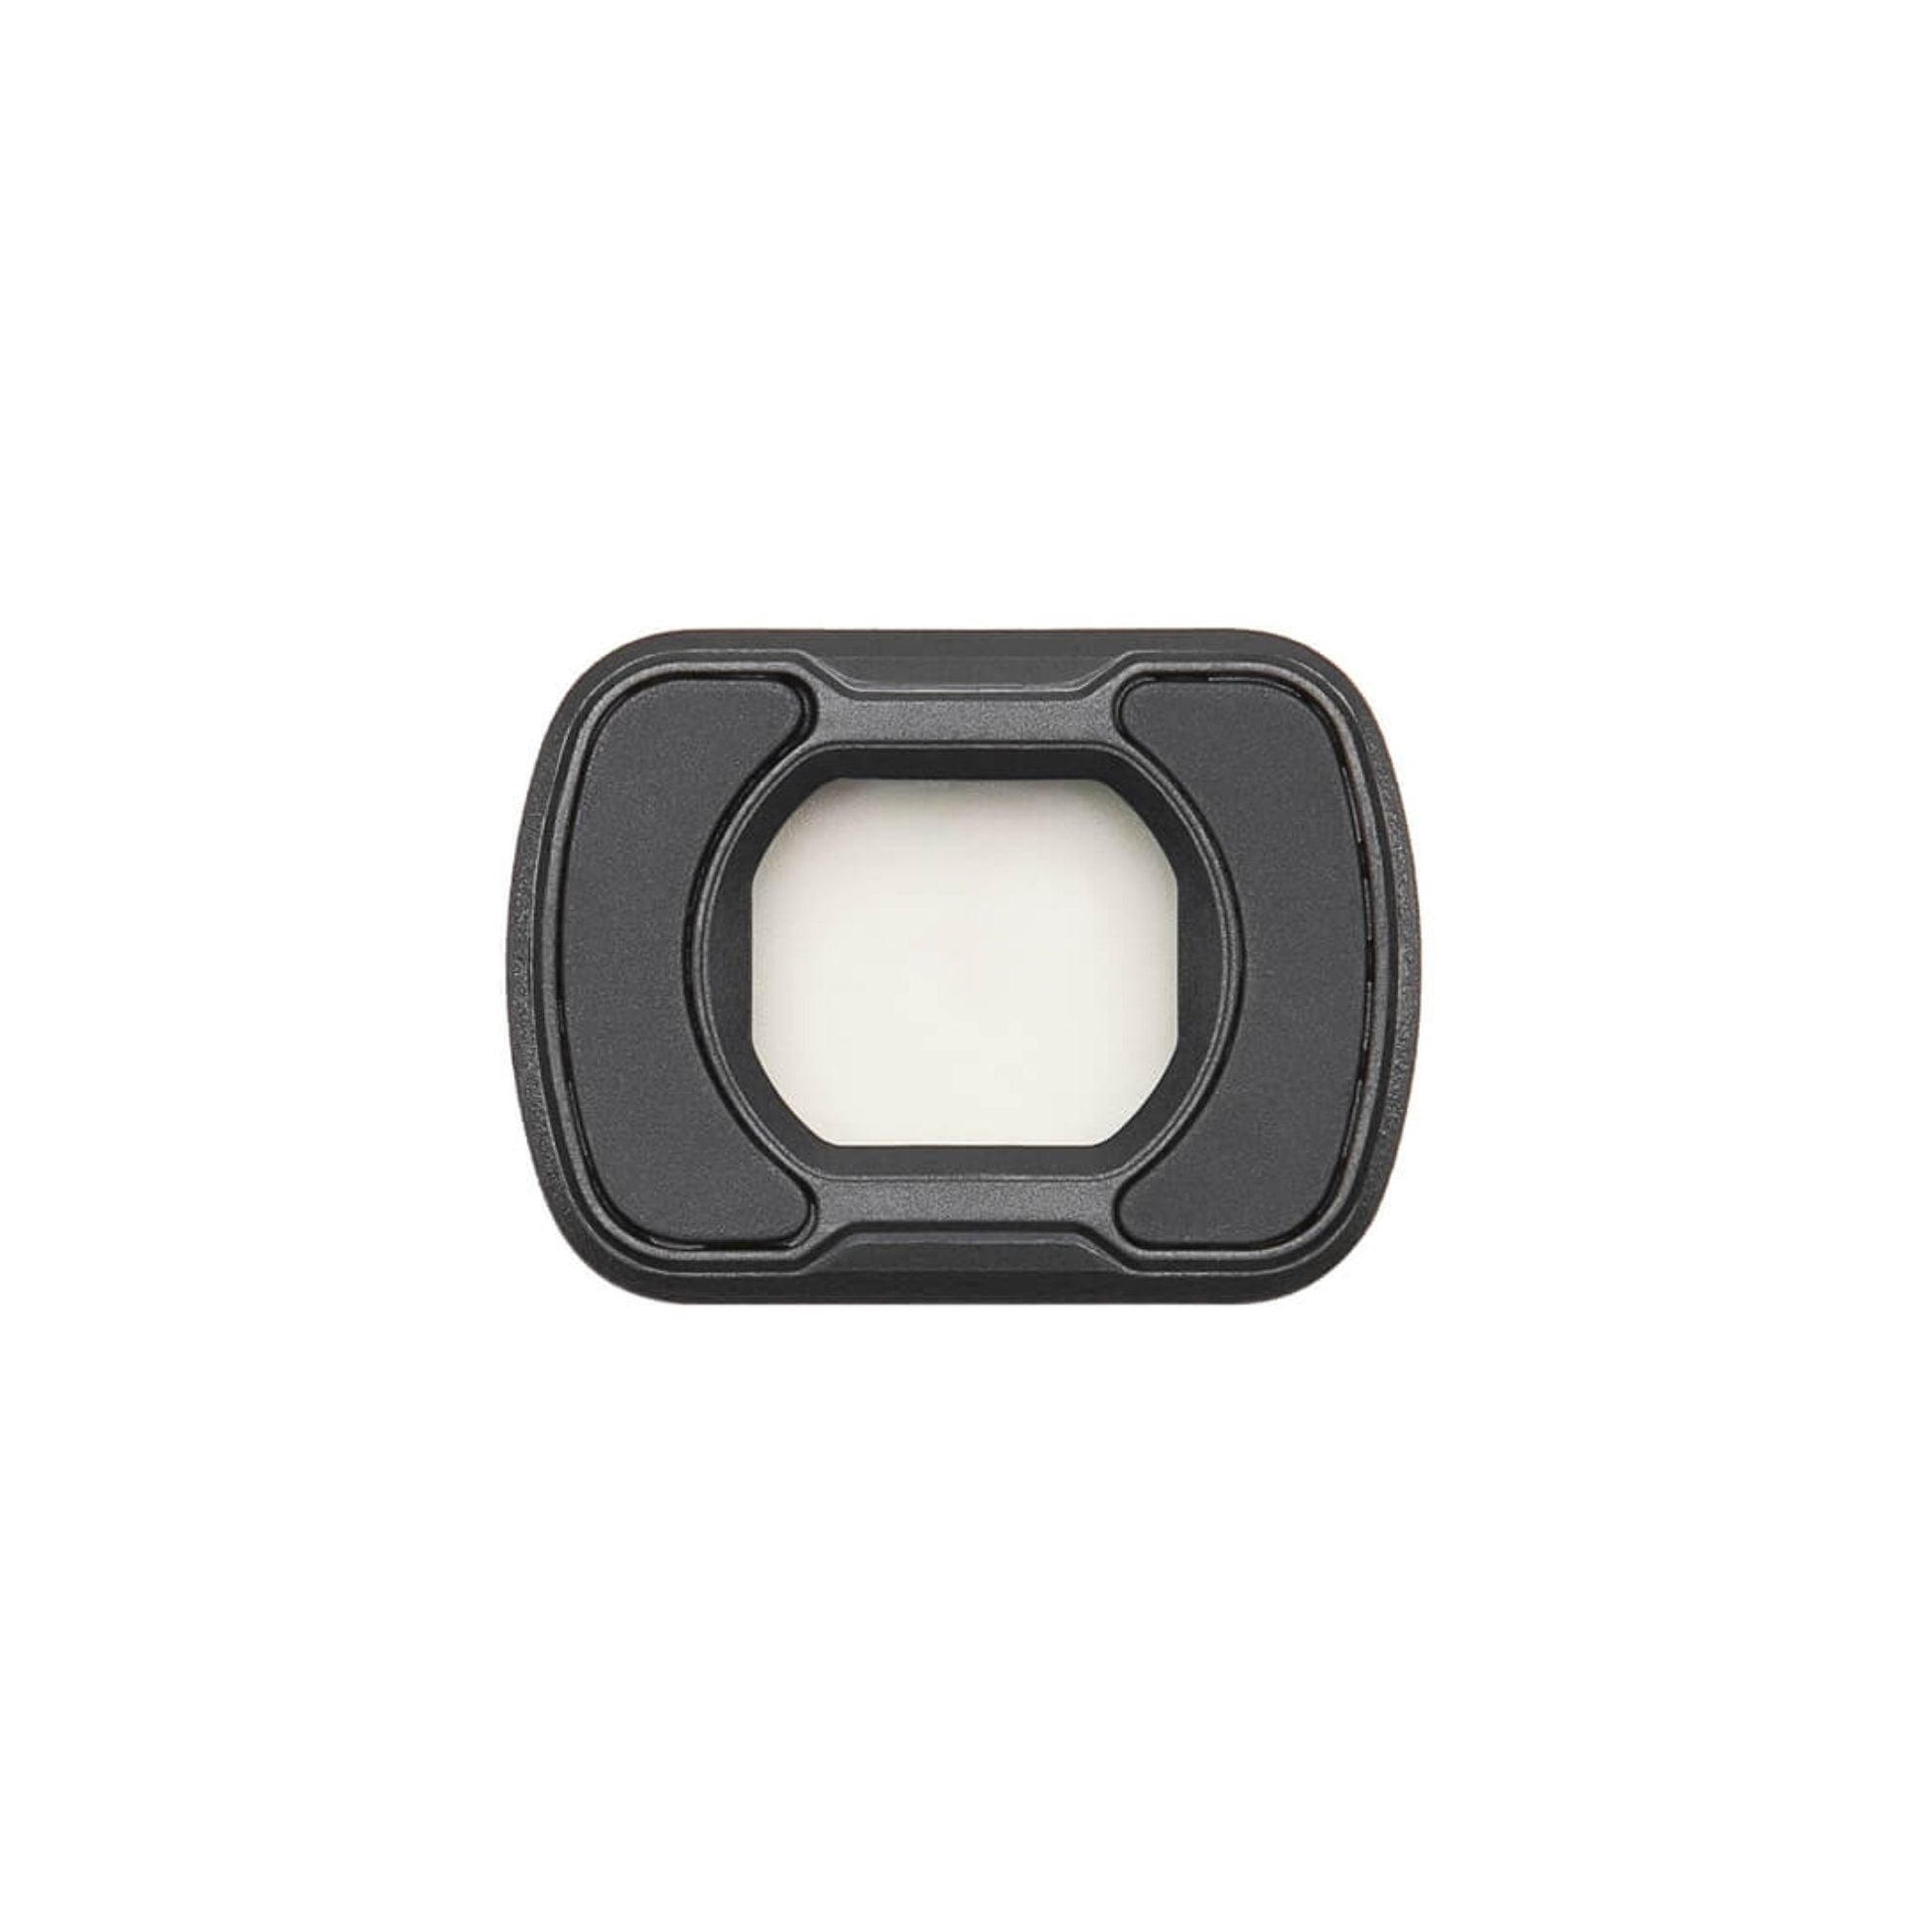 Osmo Pocket 3 Wide-Angle Lens - Silverlight Optics